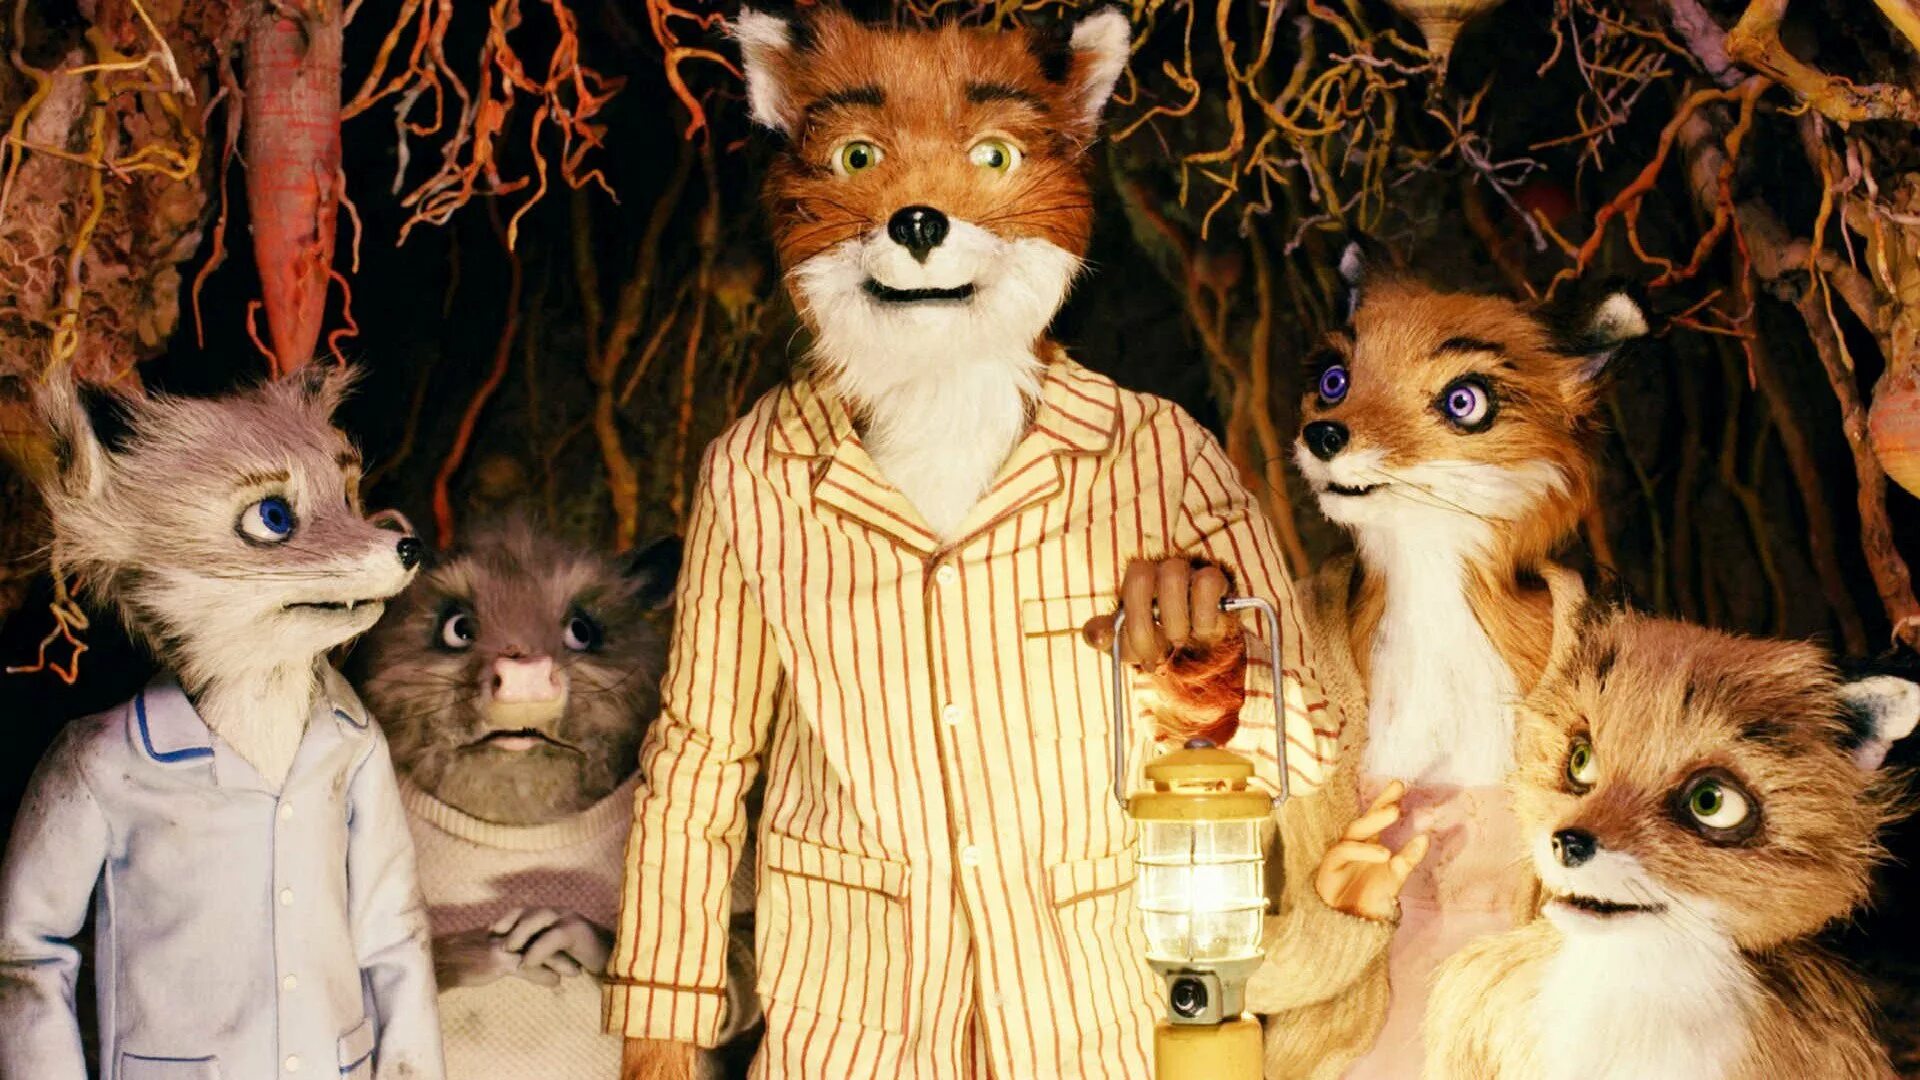 Mister fox. Бесподобный Мистер Фокс 2009. Бесподобный Мистер ФОК. Бесподобный Мистер Фокс 2. Бесподобный Мистер Фокс (fantastic Mr. Fox), 2009.